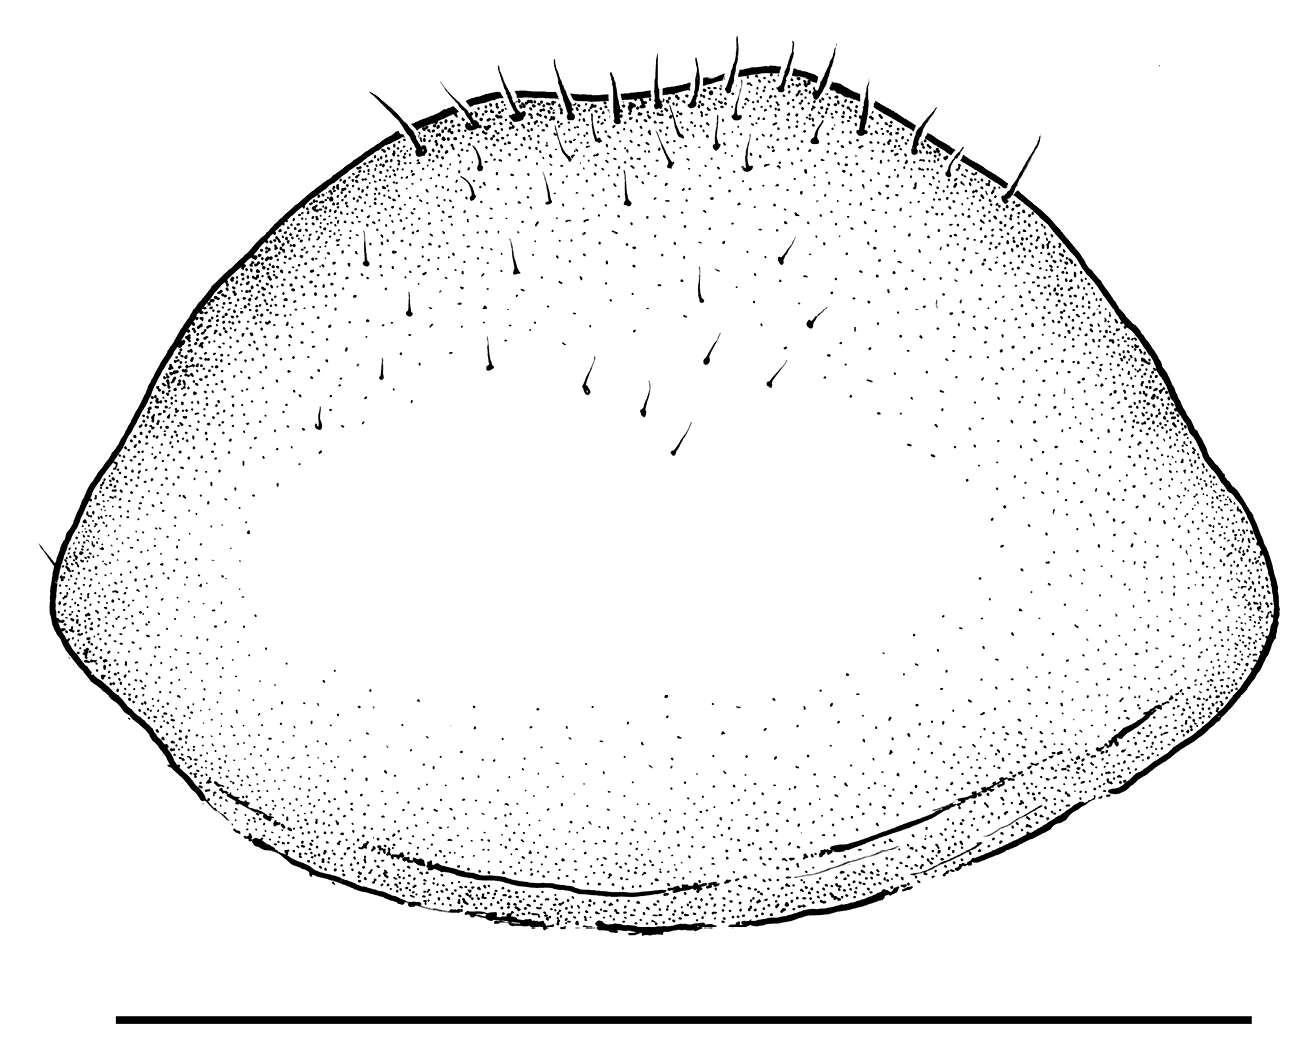 Image de Pachytroctidae